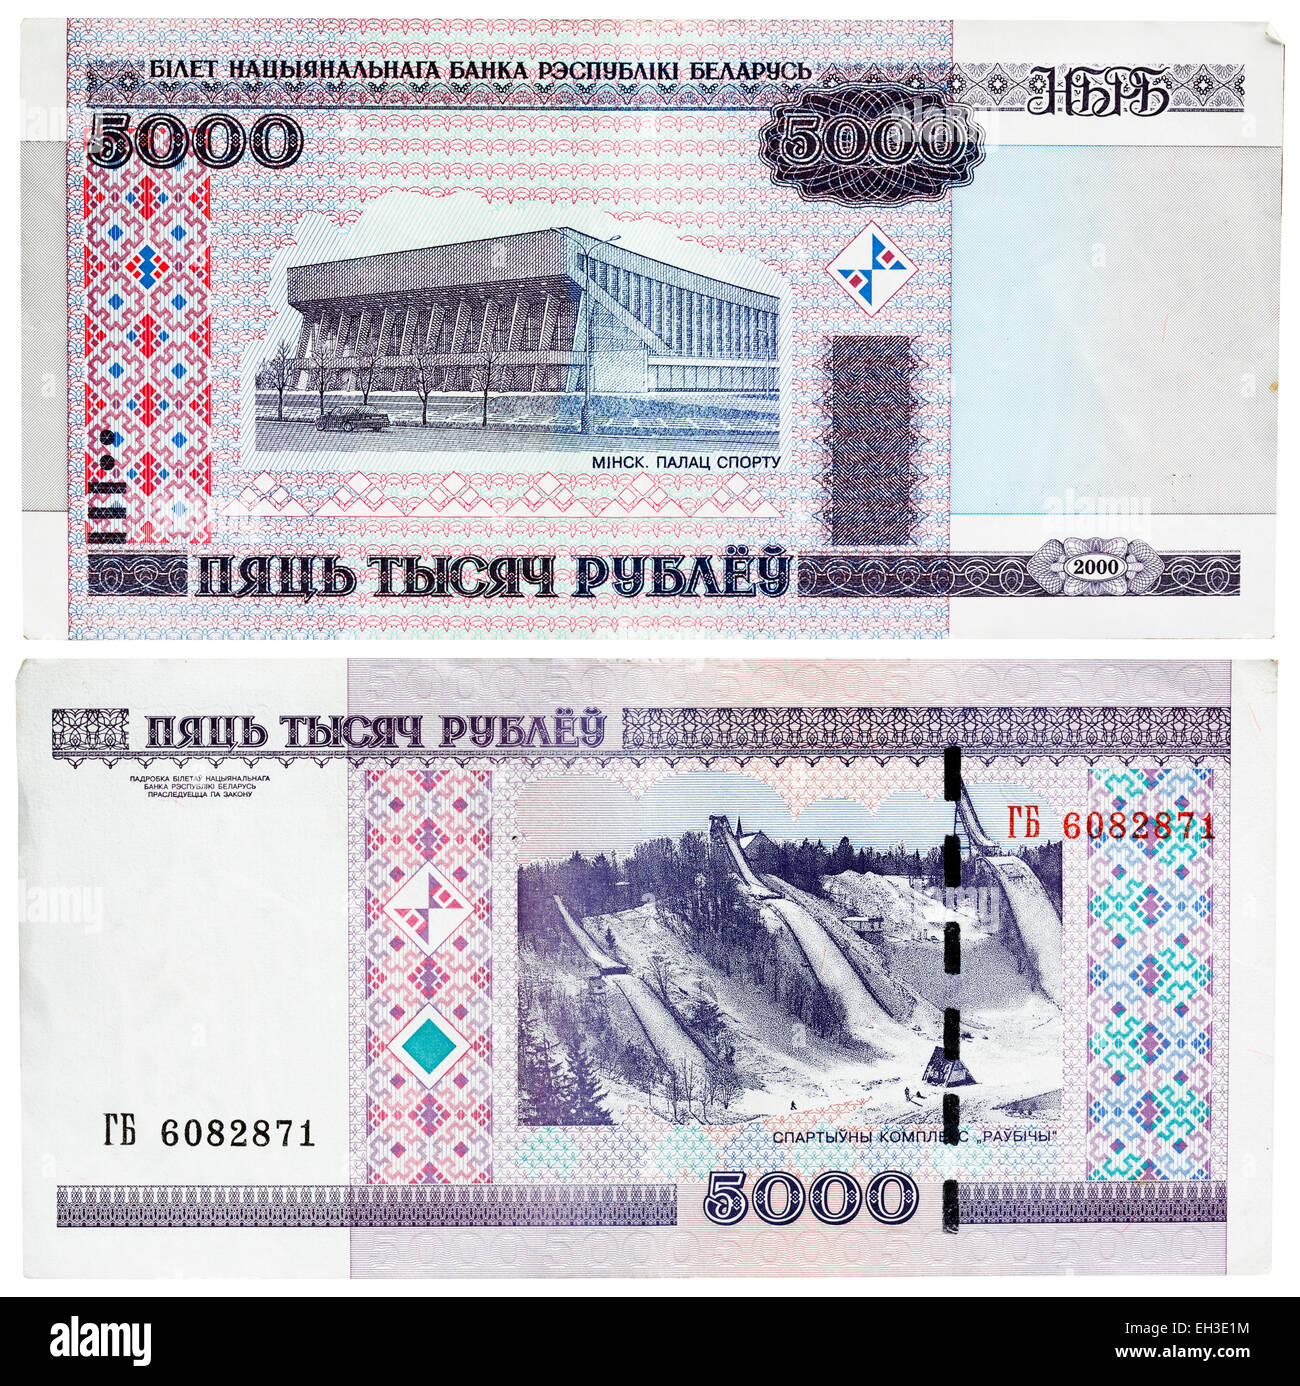 5000 roubles banknote, Minsk, Belarus, 2000 Stock Photo